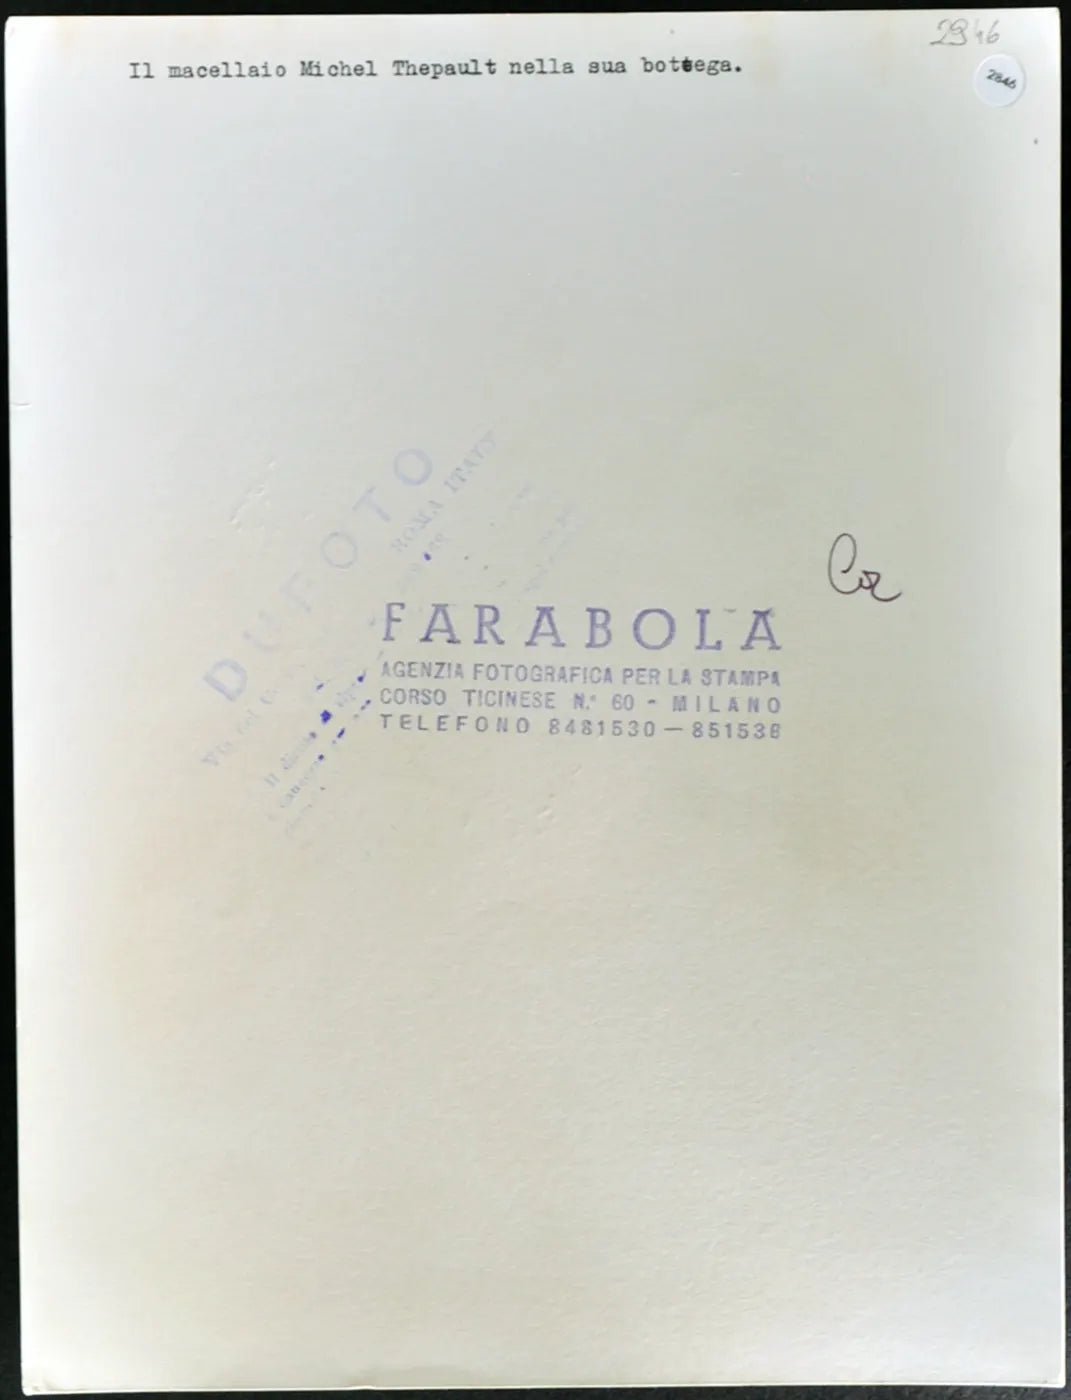 Michel Thepault Macellaio anni 60 Ft 2846 - Stampa 21x27 cm - Farabola Stampa ai sali d'argento